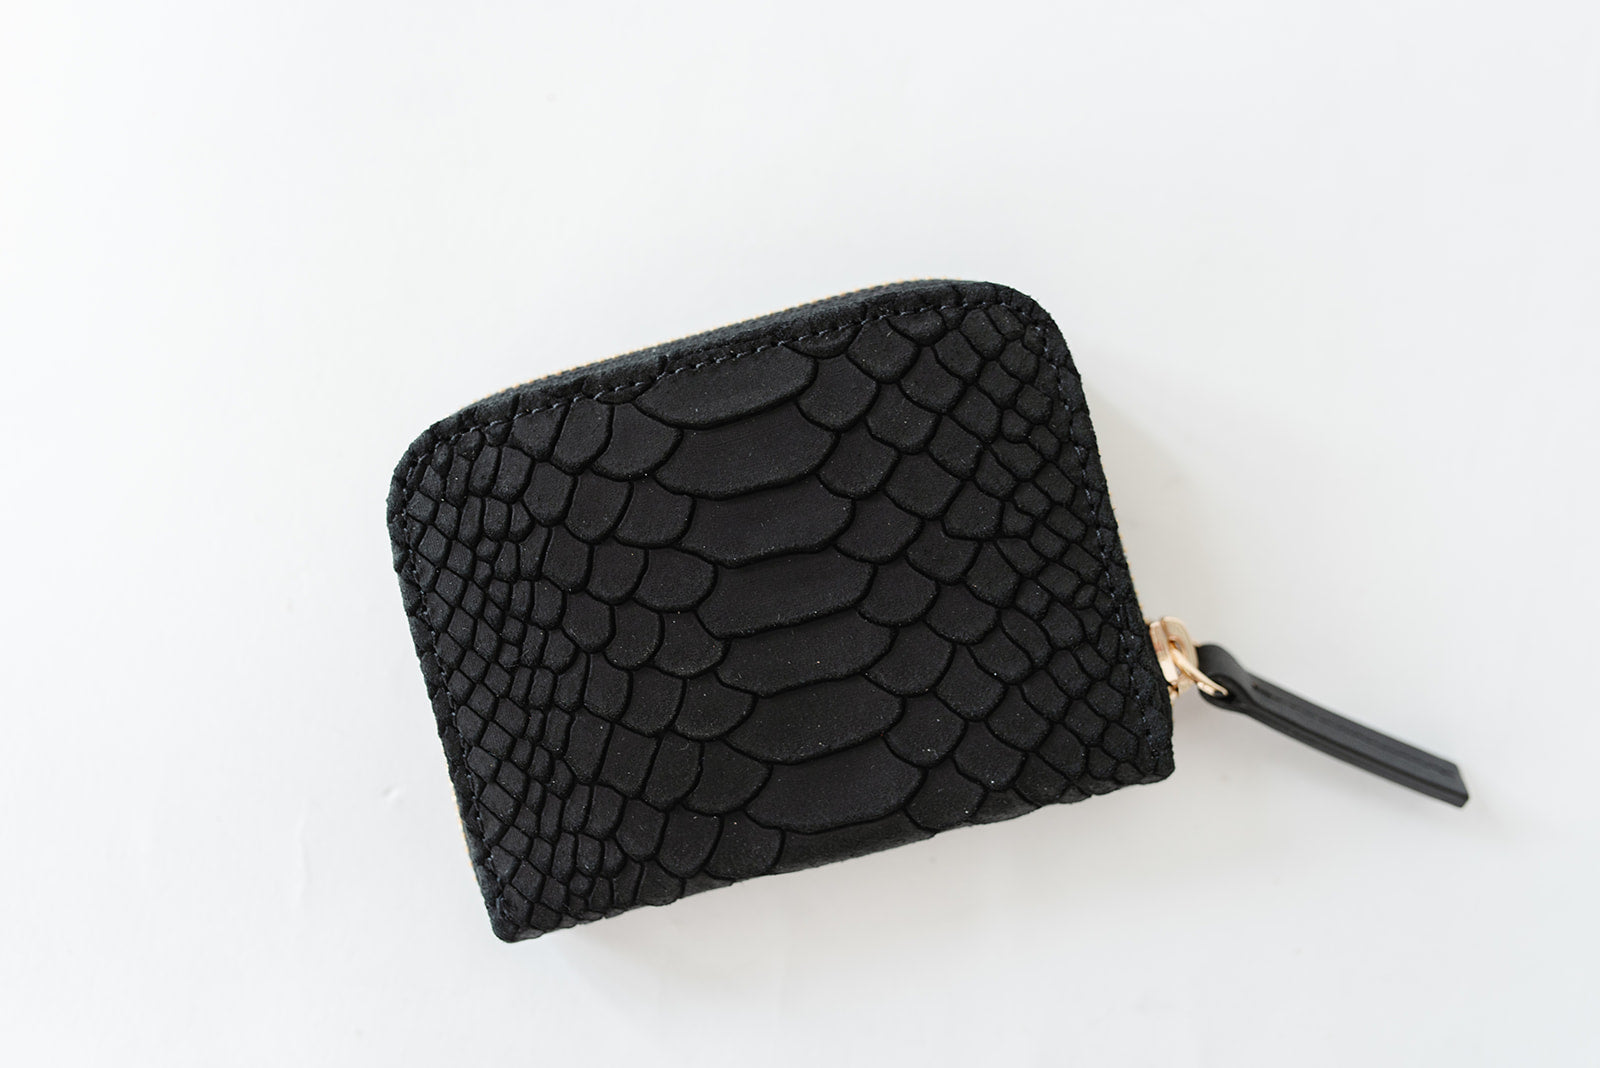 Sorella Handbags and Accessories Italian Leather